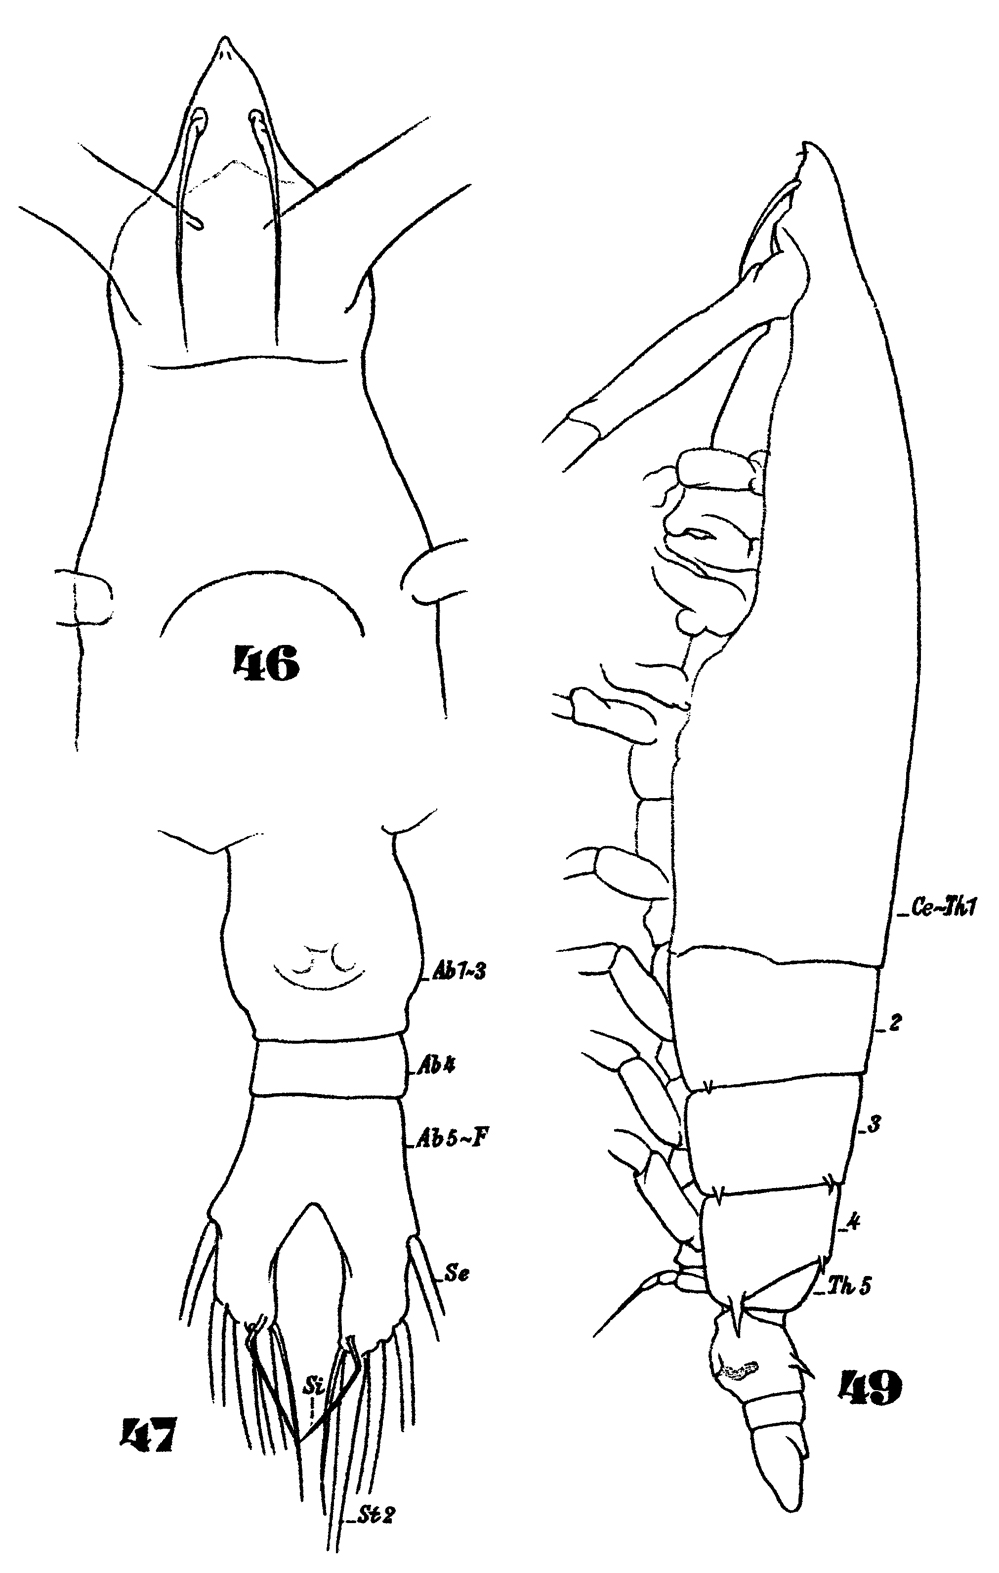 Espèce Rhincalanus nasutus - Planche 15 de figures morphologiques